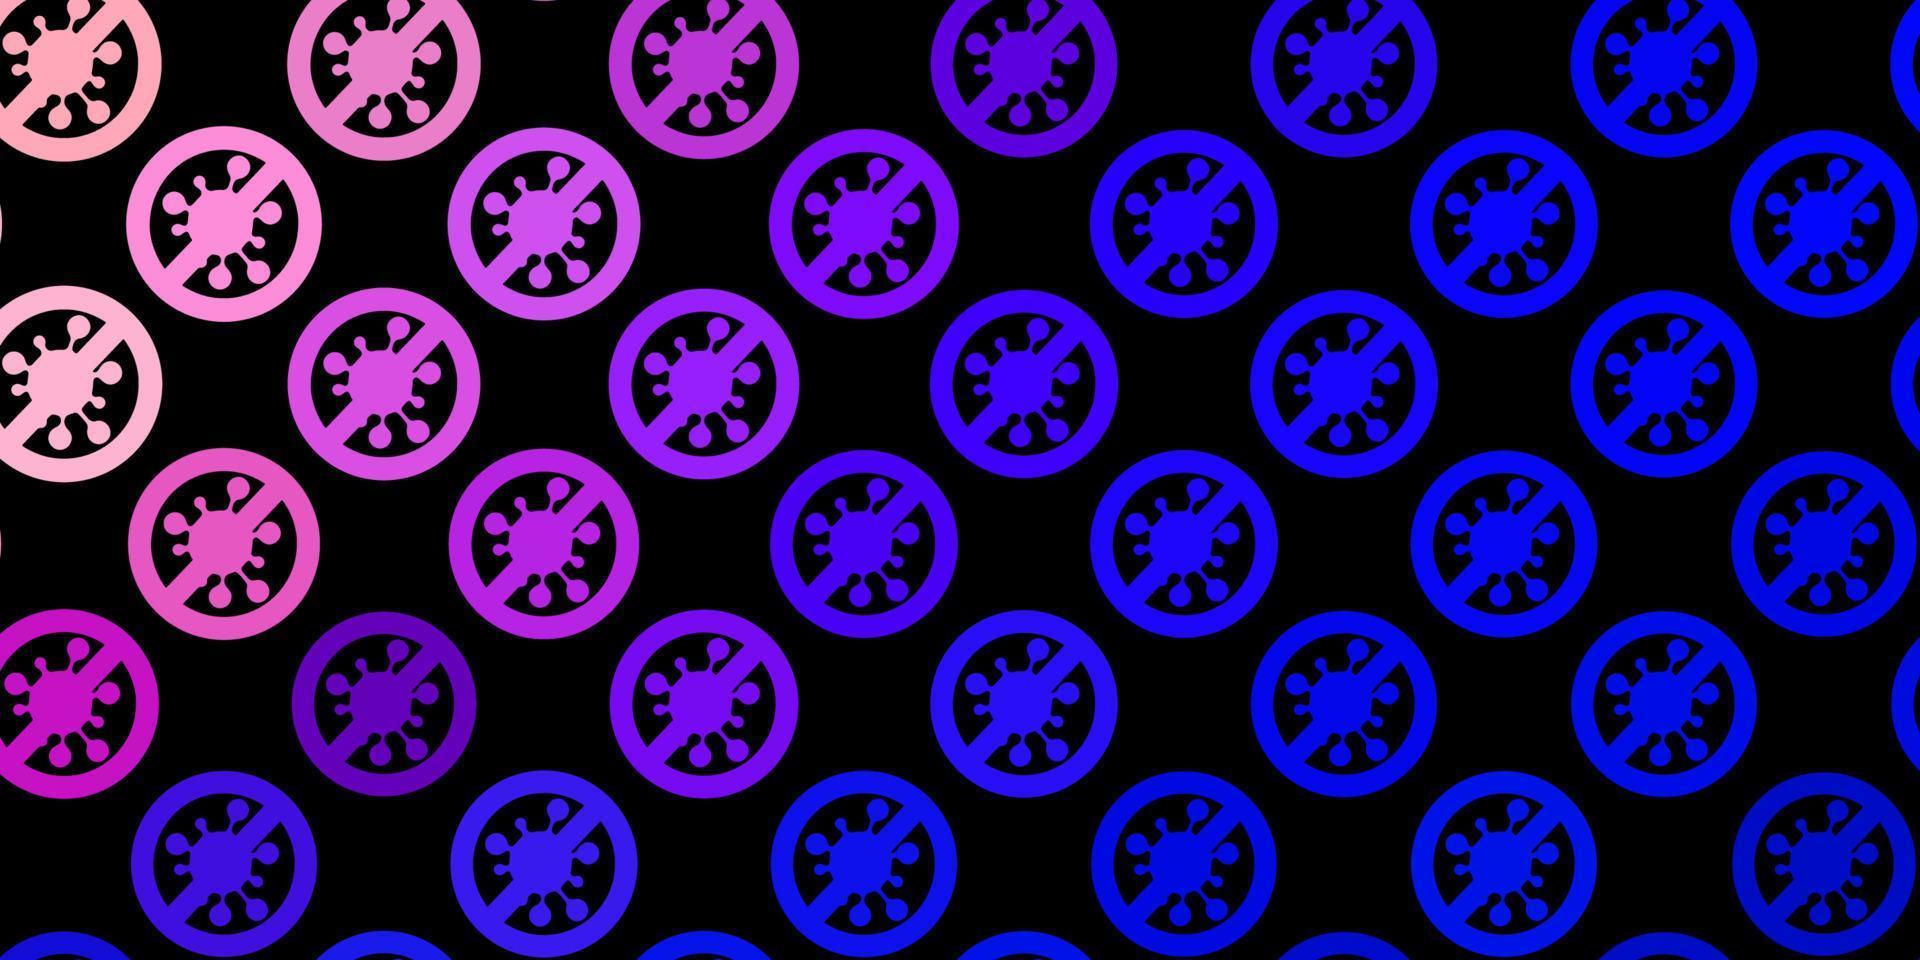 Dark Blue, Yellow vector backdrop with virus symbols.